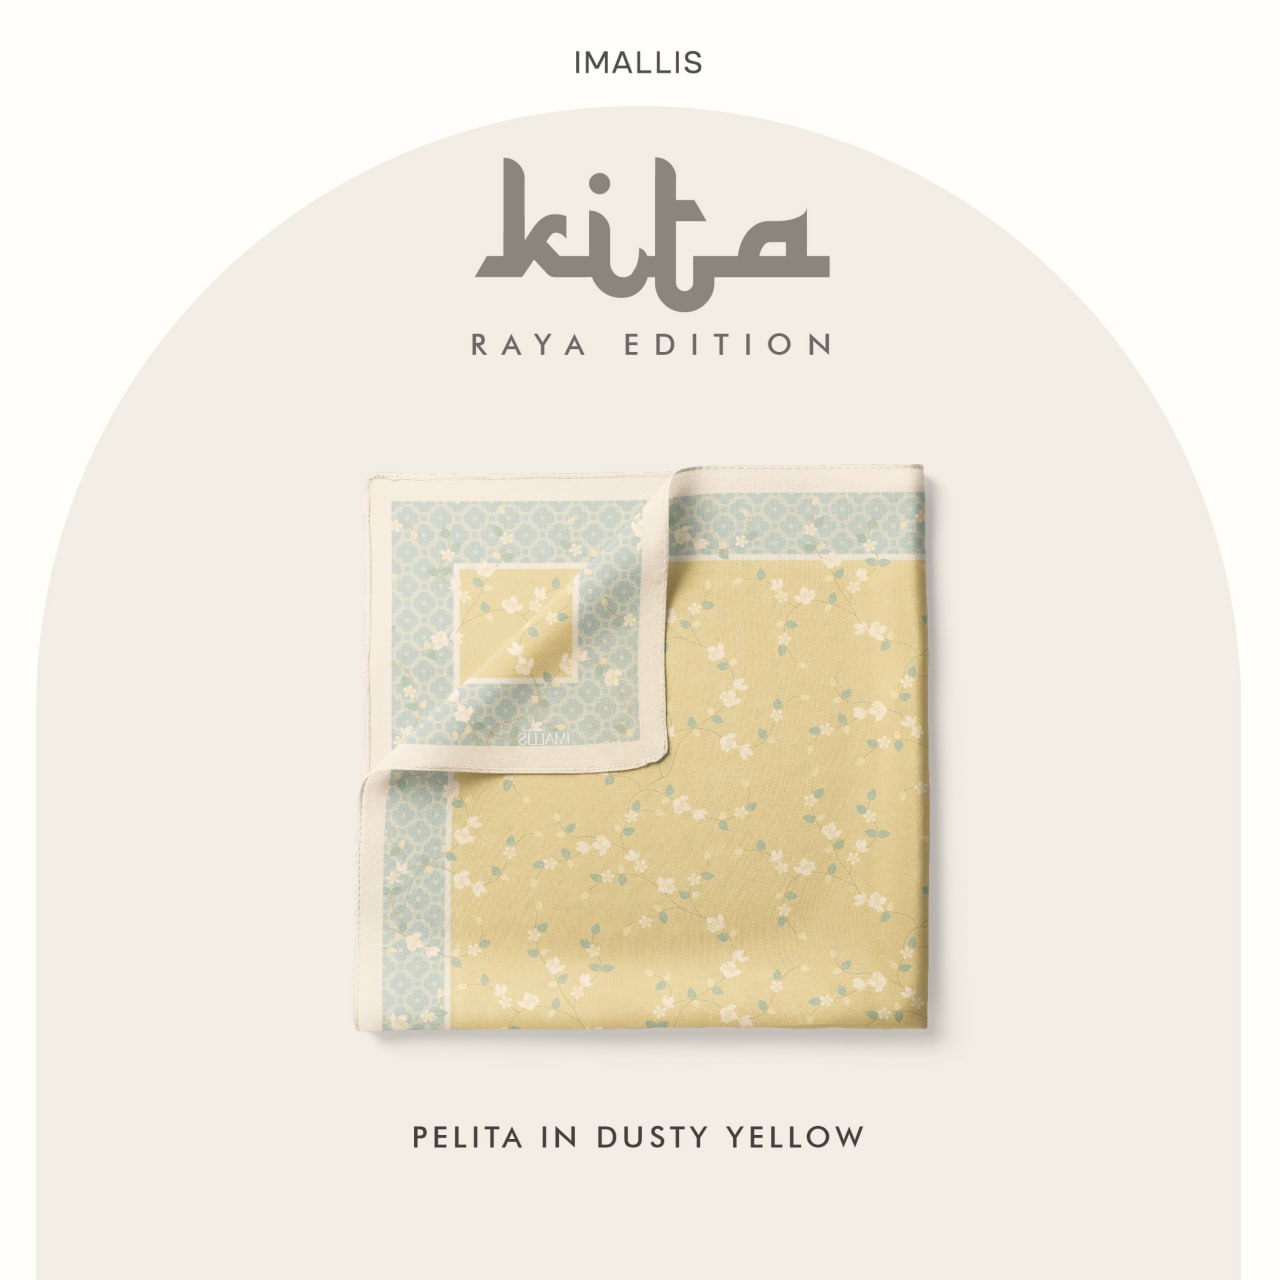 Pelita in Dusty Yellow